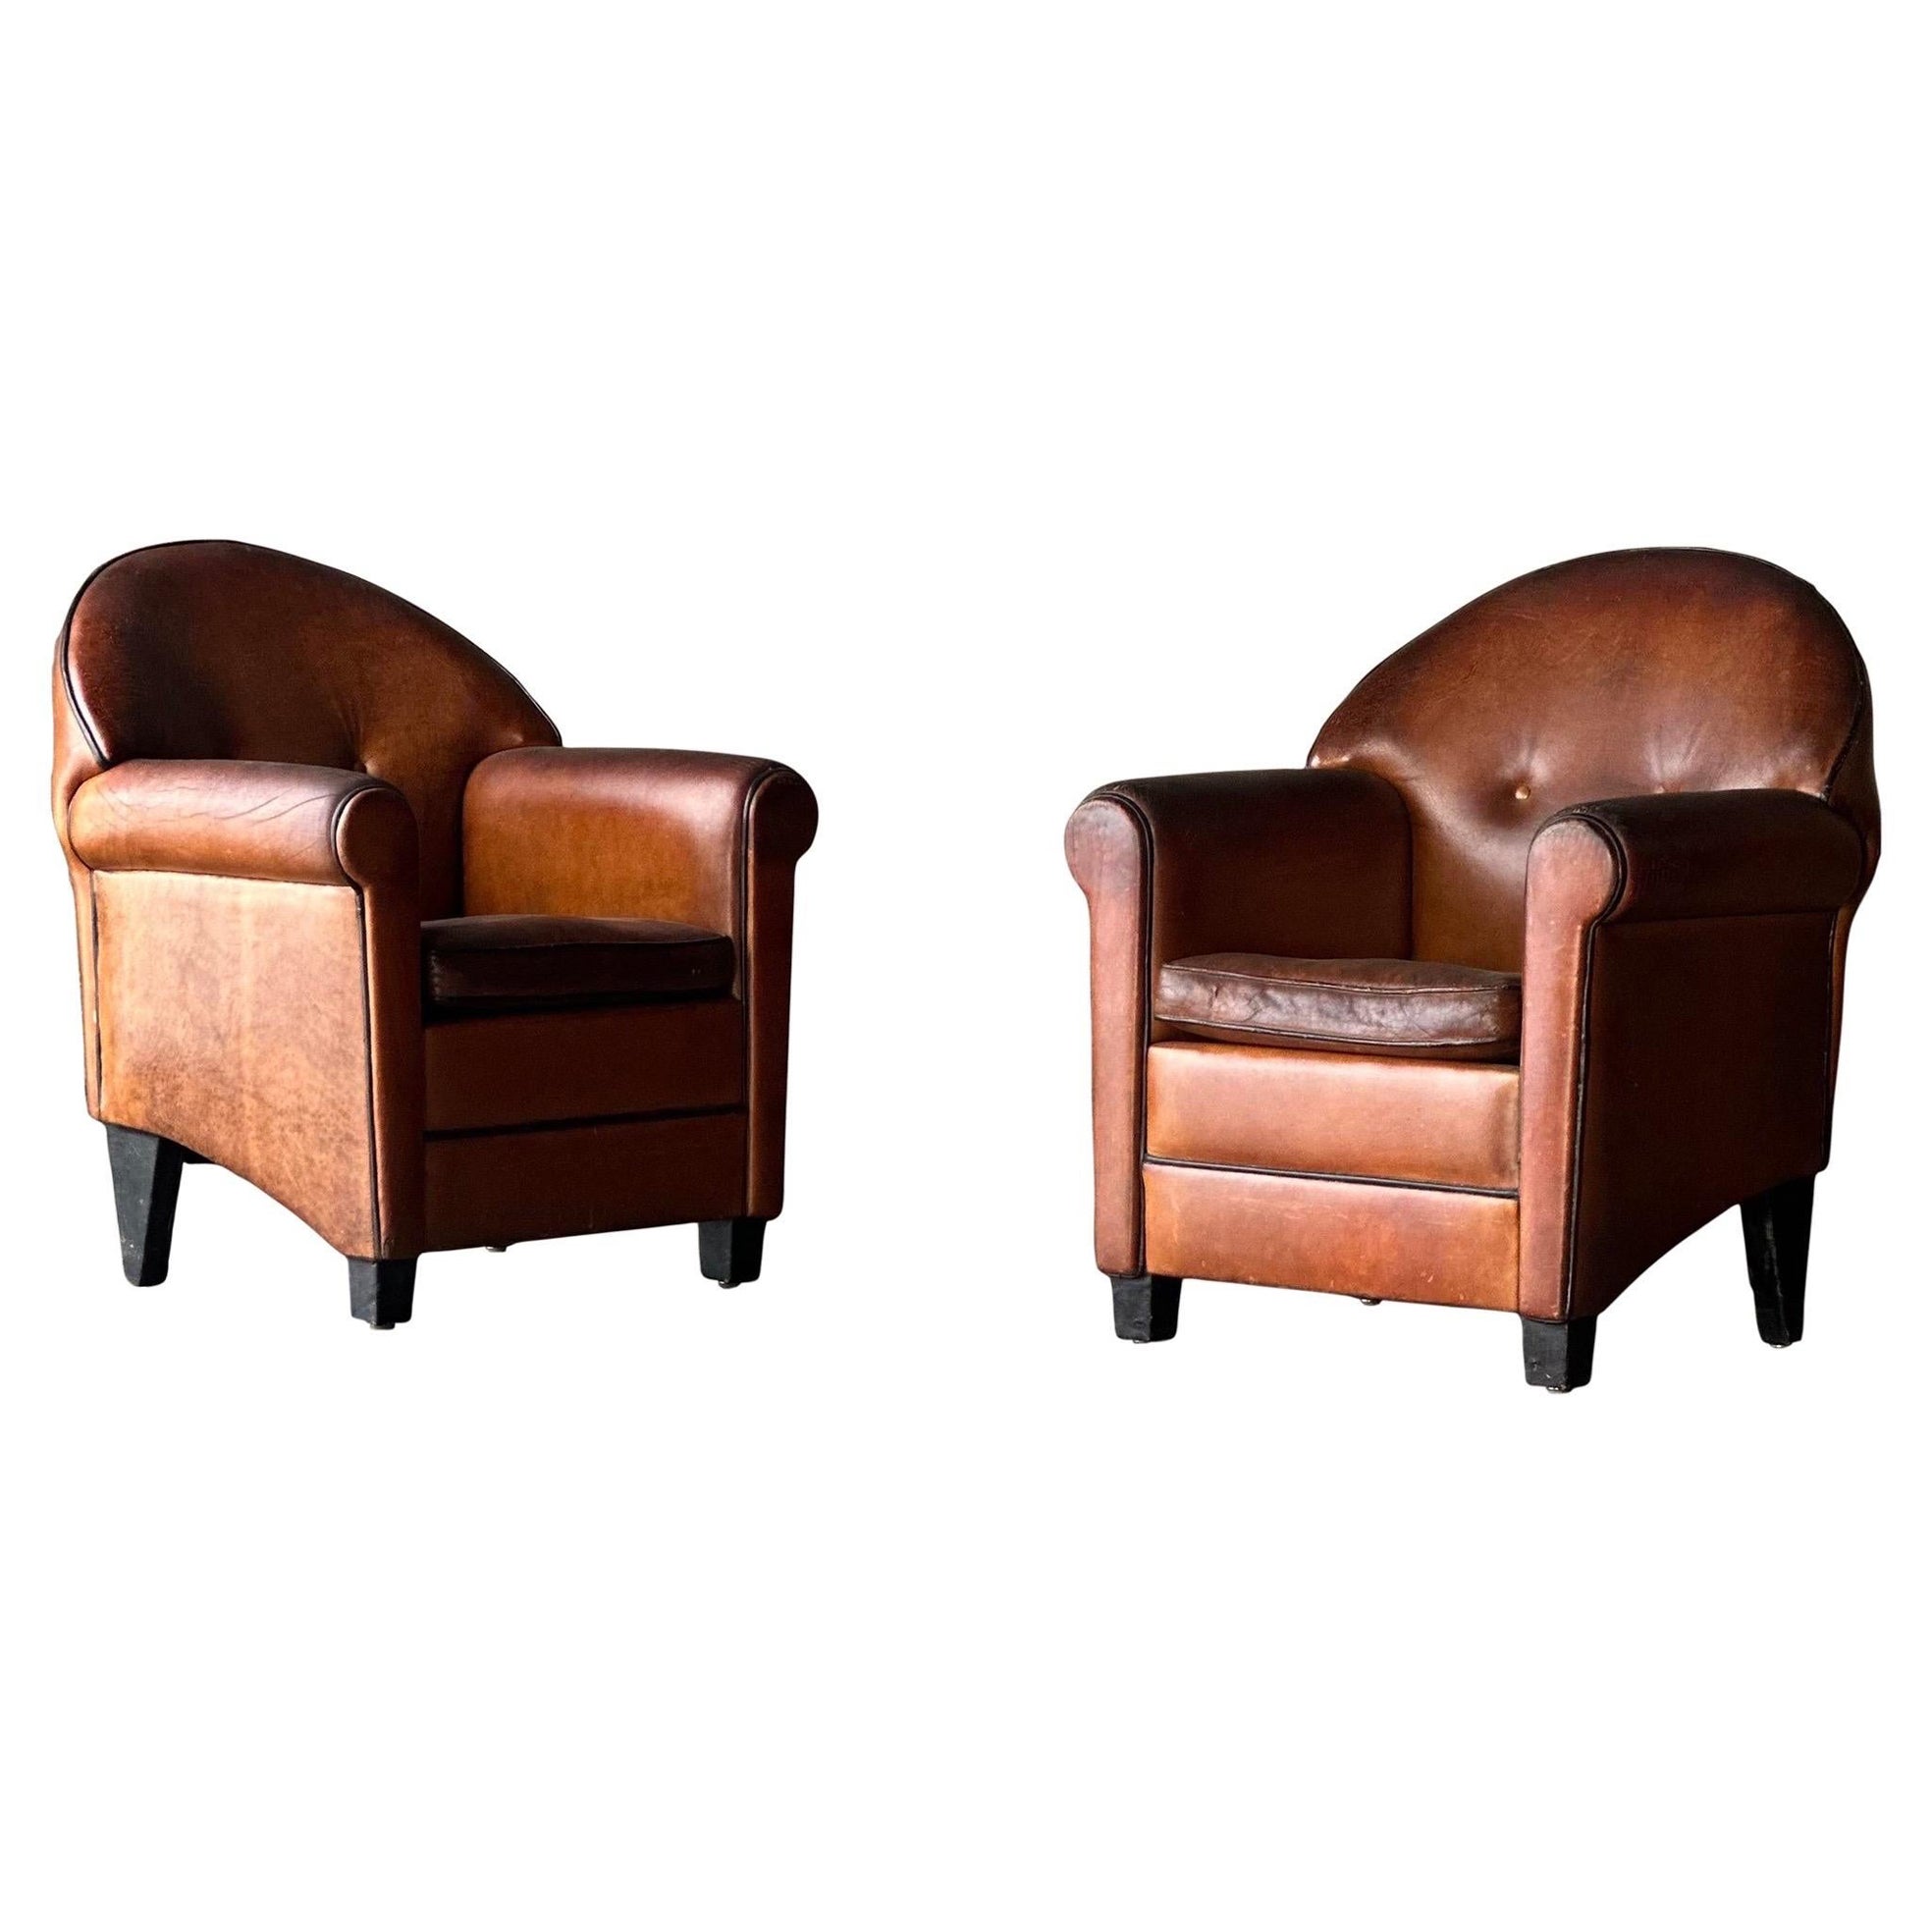 Bart Van Bekhoven ‘Monet’ Chairs - a Pair For Sale